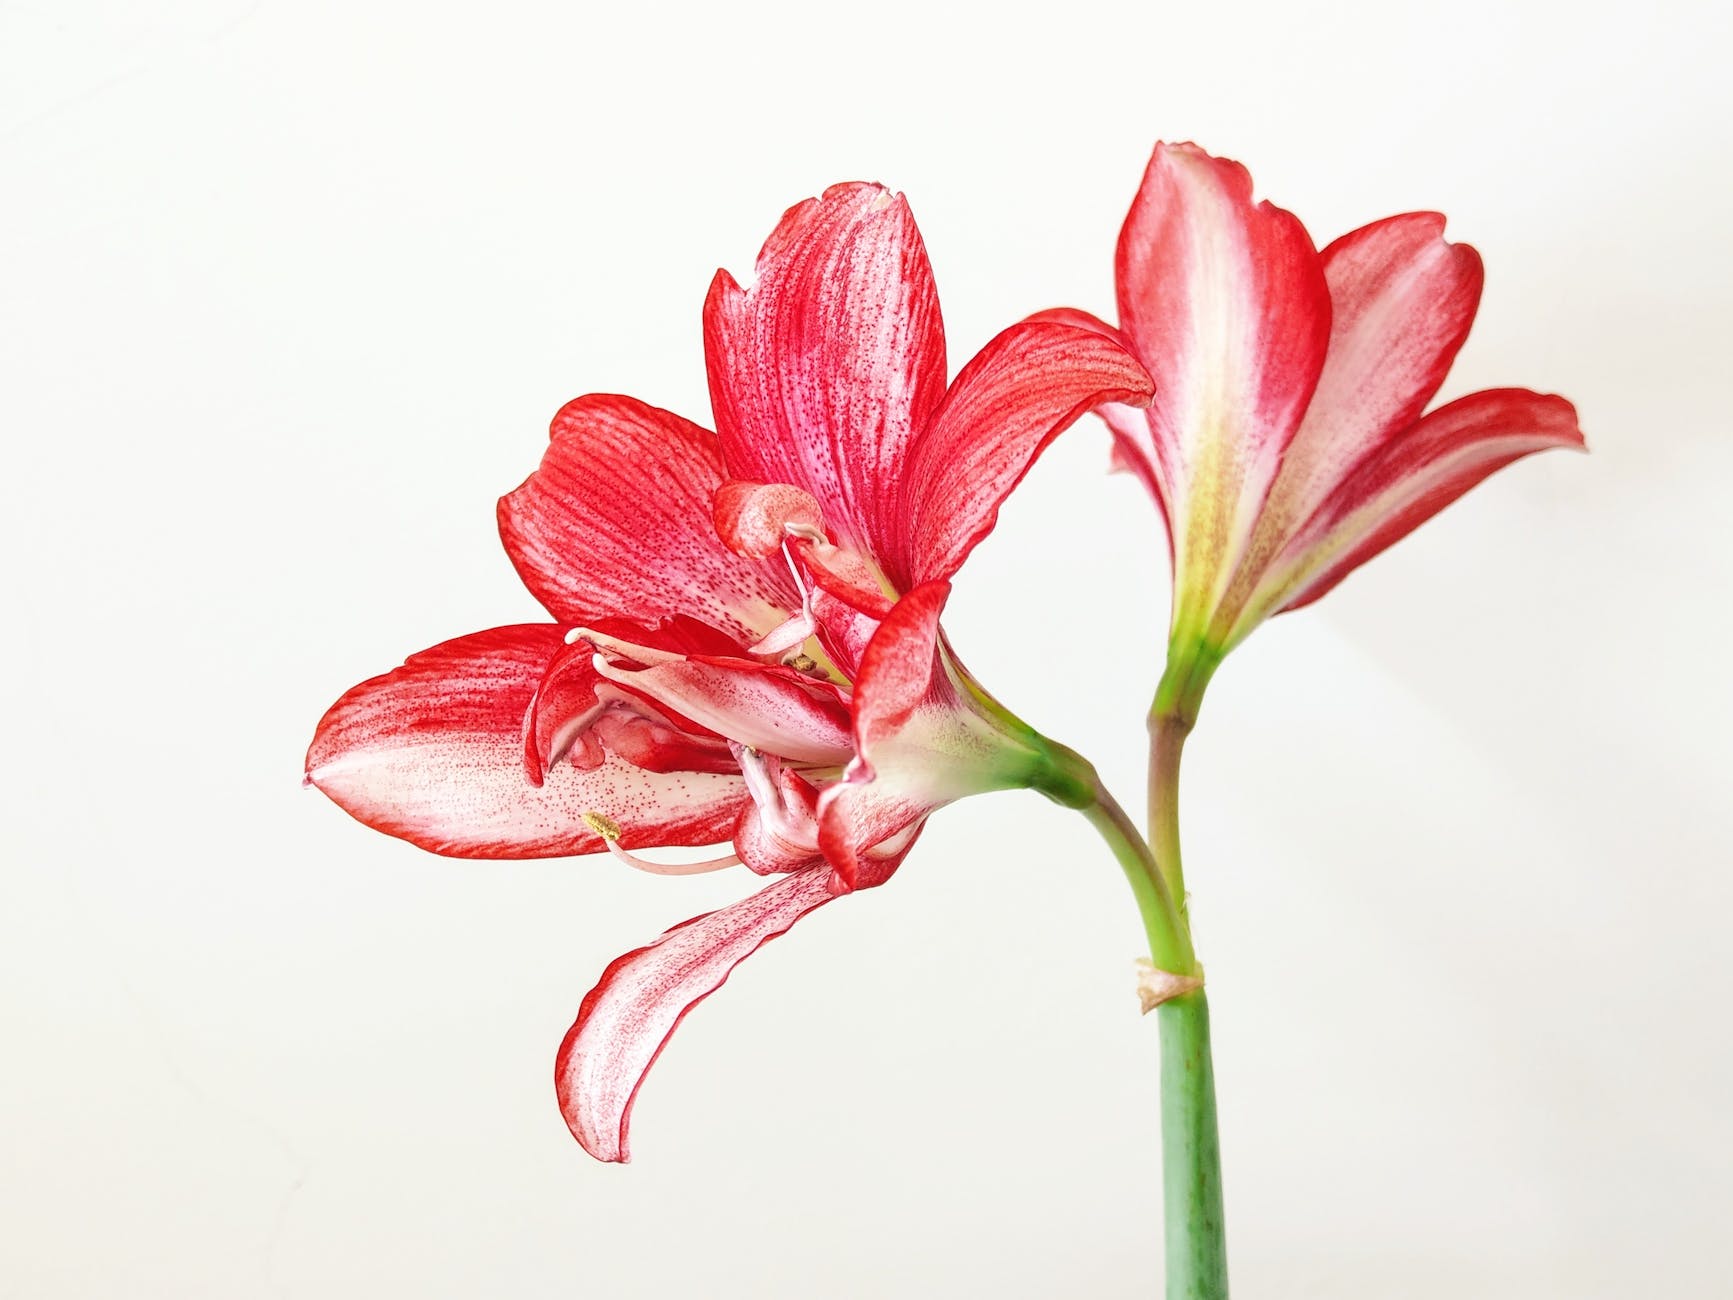 red amaryllis flowers in bloom